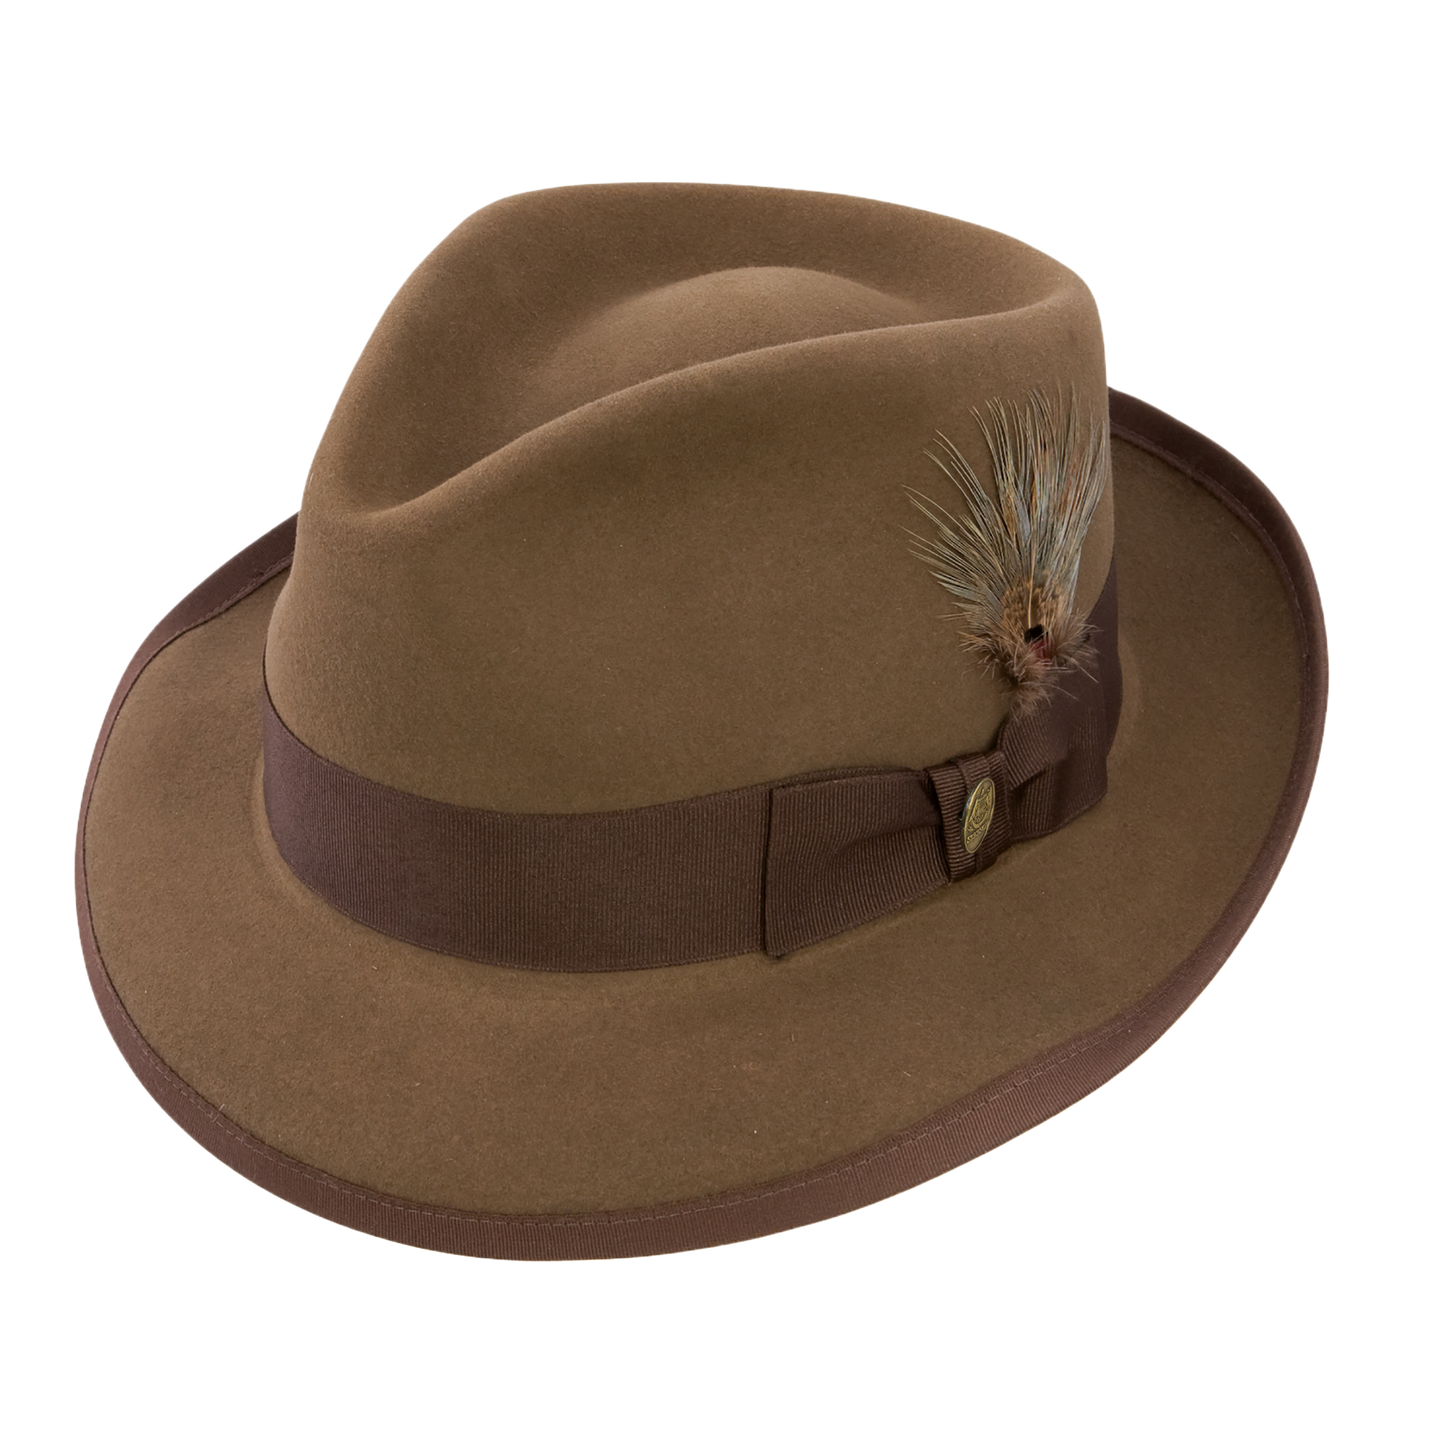 Stetson Men's Whippet Tawny Brown Felt Fedora Hat TFWIPTB102302